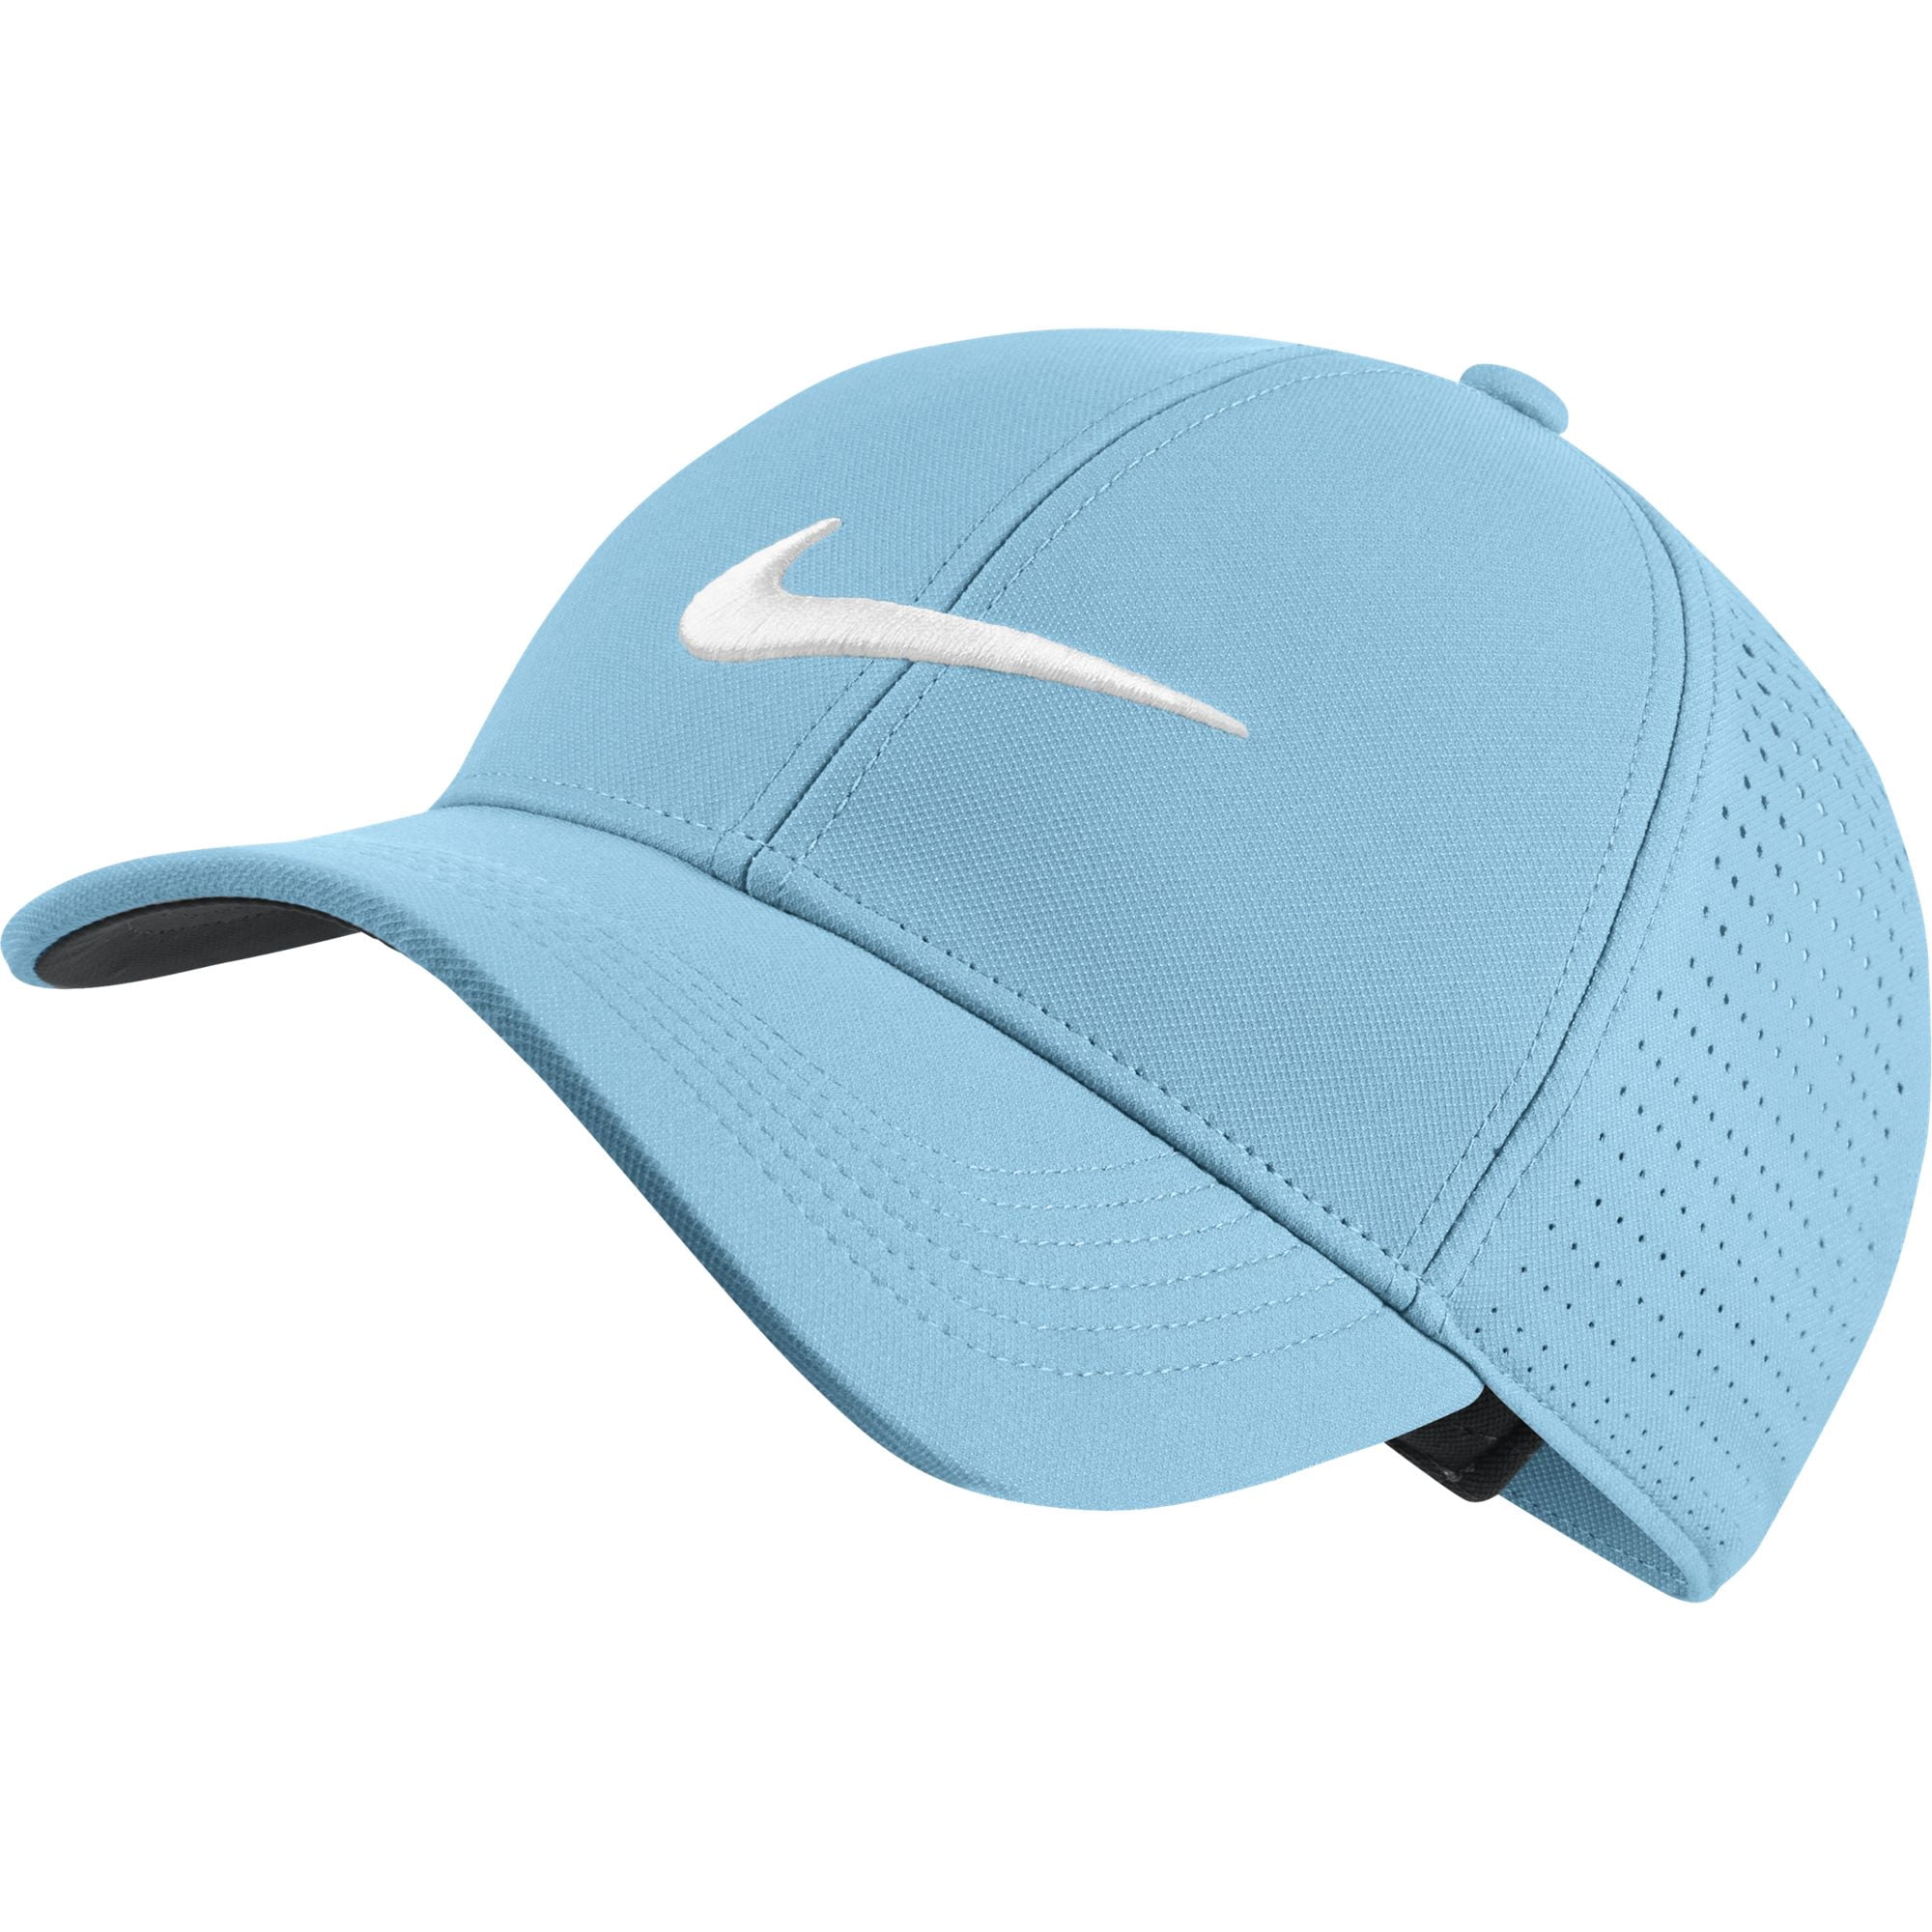 NEW AeroBill Perforated Blue/White Adjustable Golf Hat/Cap - Walmart.com